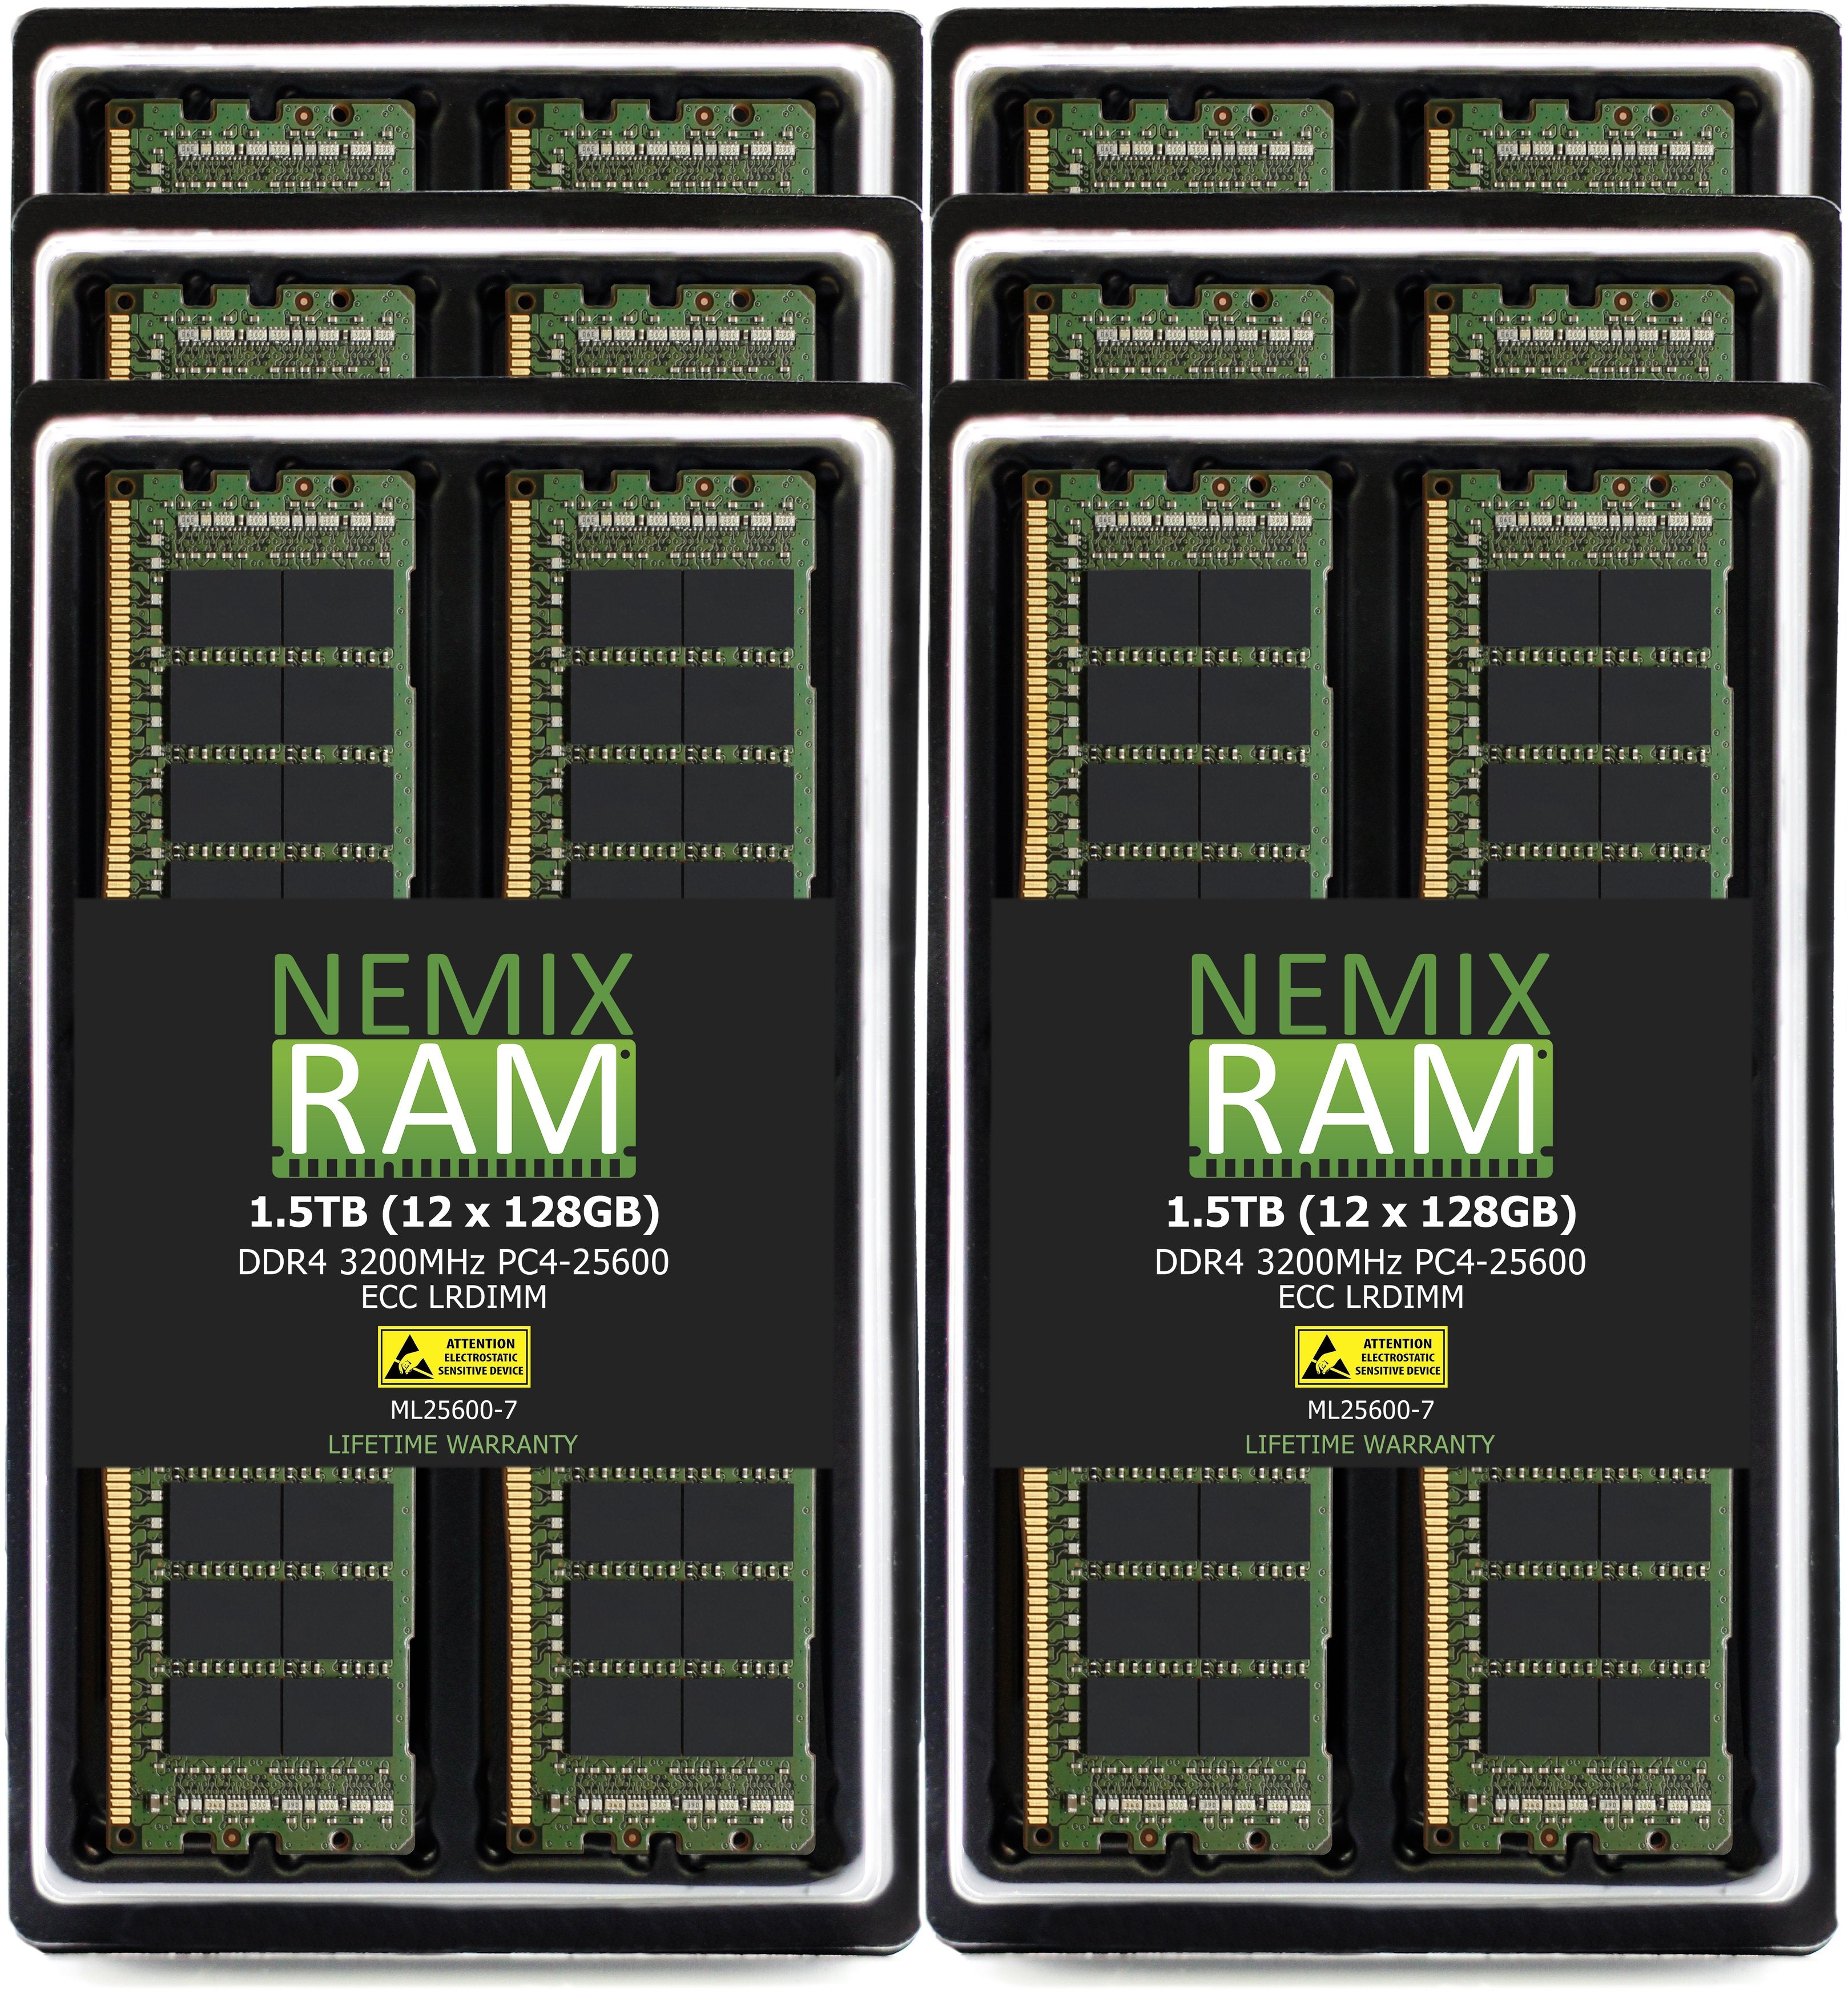 DDR4 3200MHZ PC4-25600 LRDIMM 8RX4